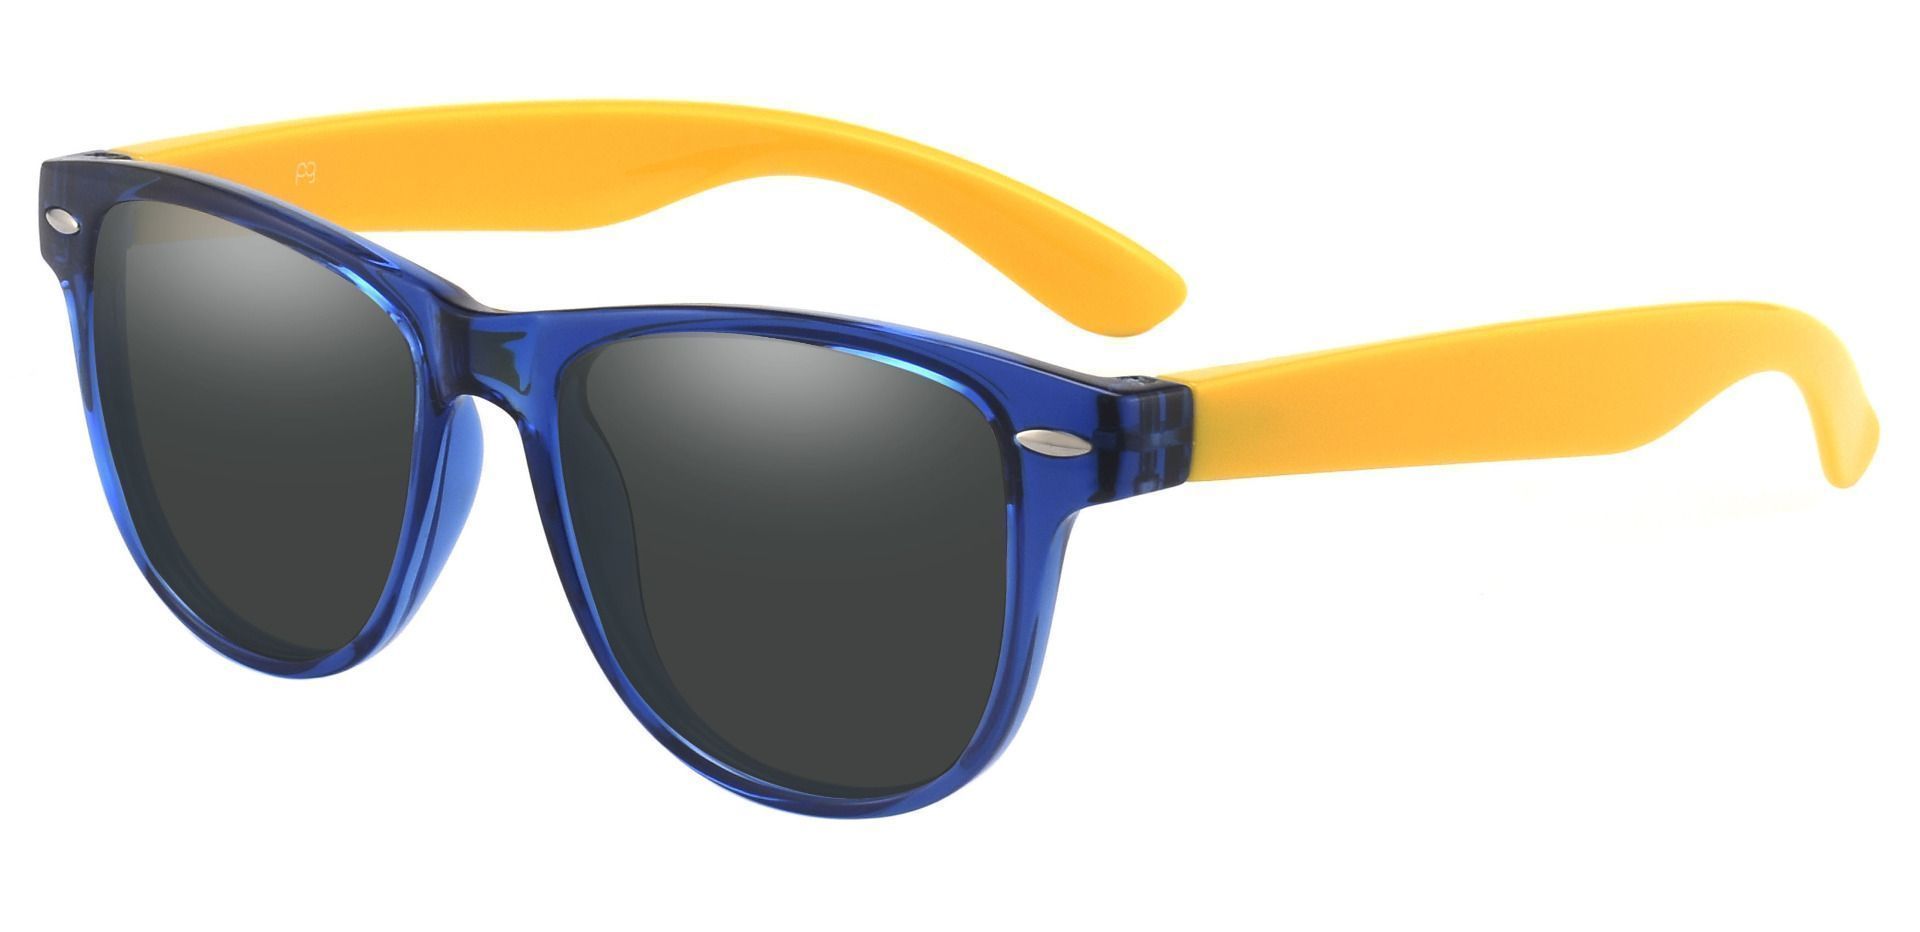 Radio Square Prescription Sunglasses - Blue Frame With Gray Lenses